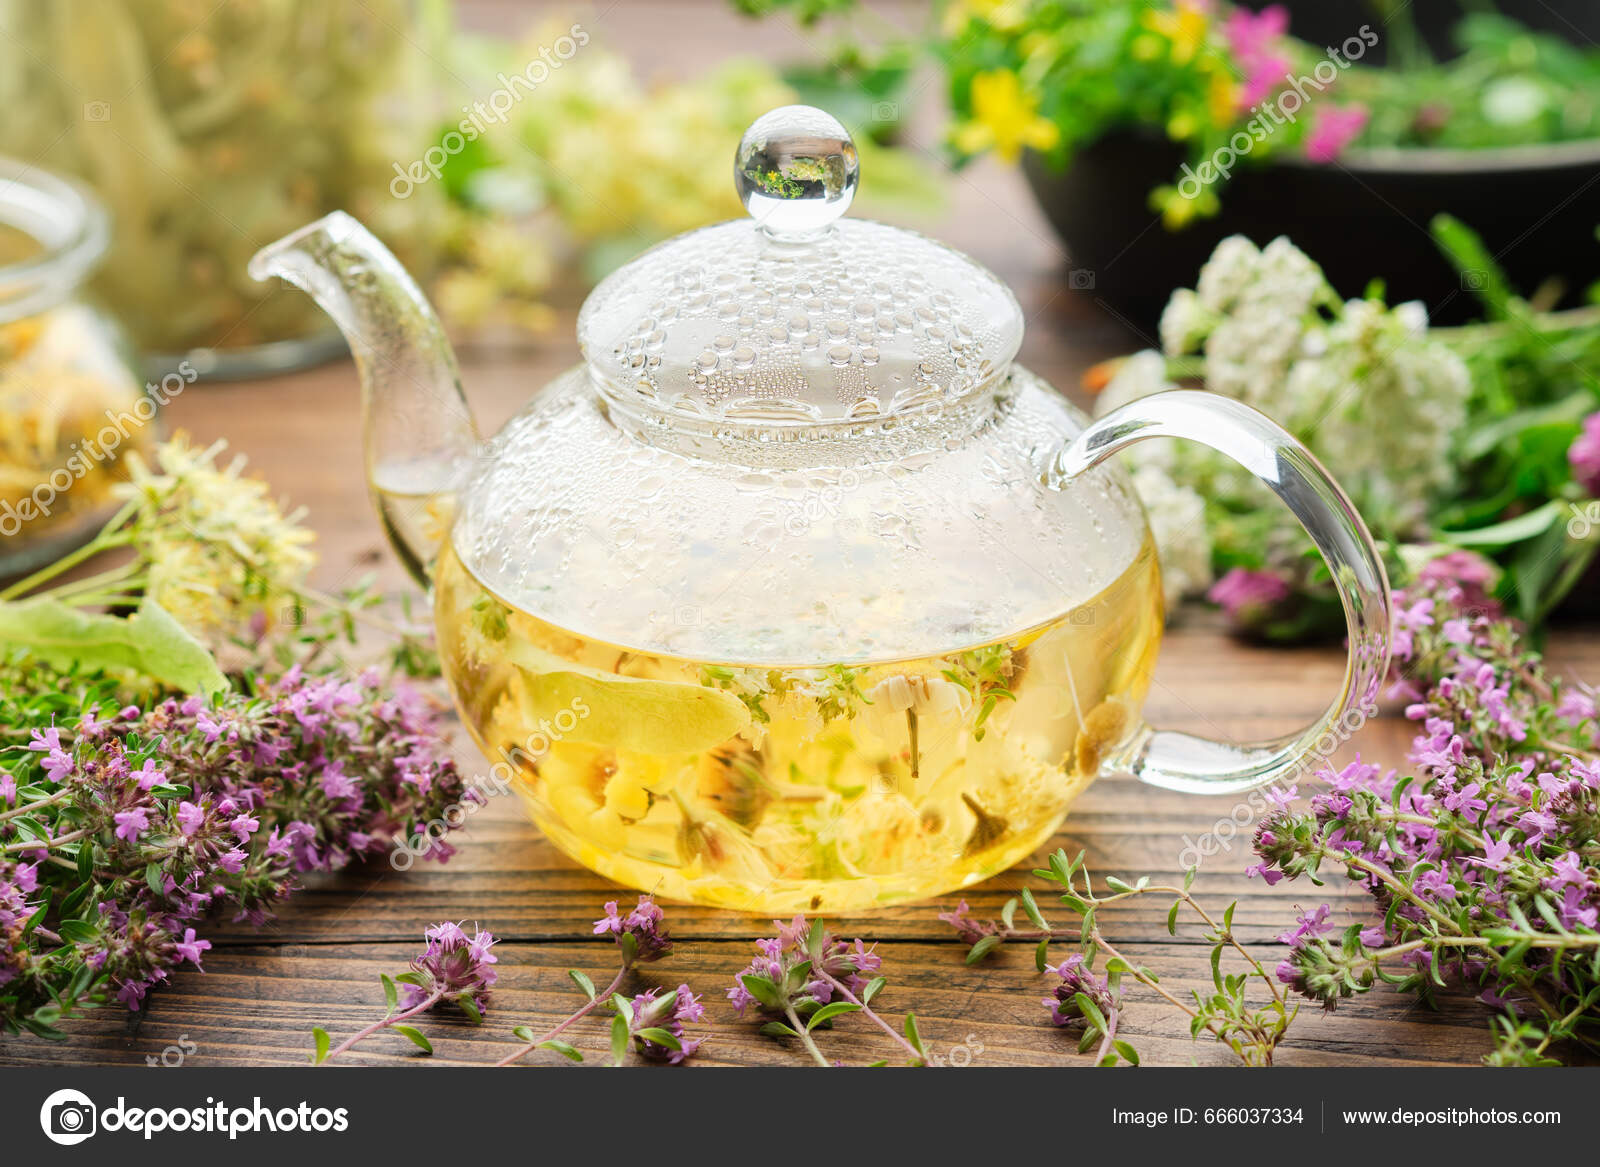 https://st5.depositphotos.com/1001651/66603/i/1600/depositphotos_666037334-stock-photo-glass-tea-kettle-healthy-herbal.jpg